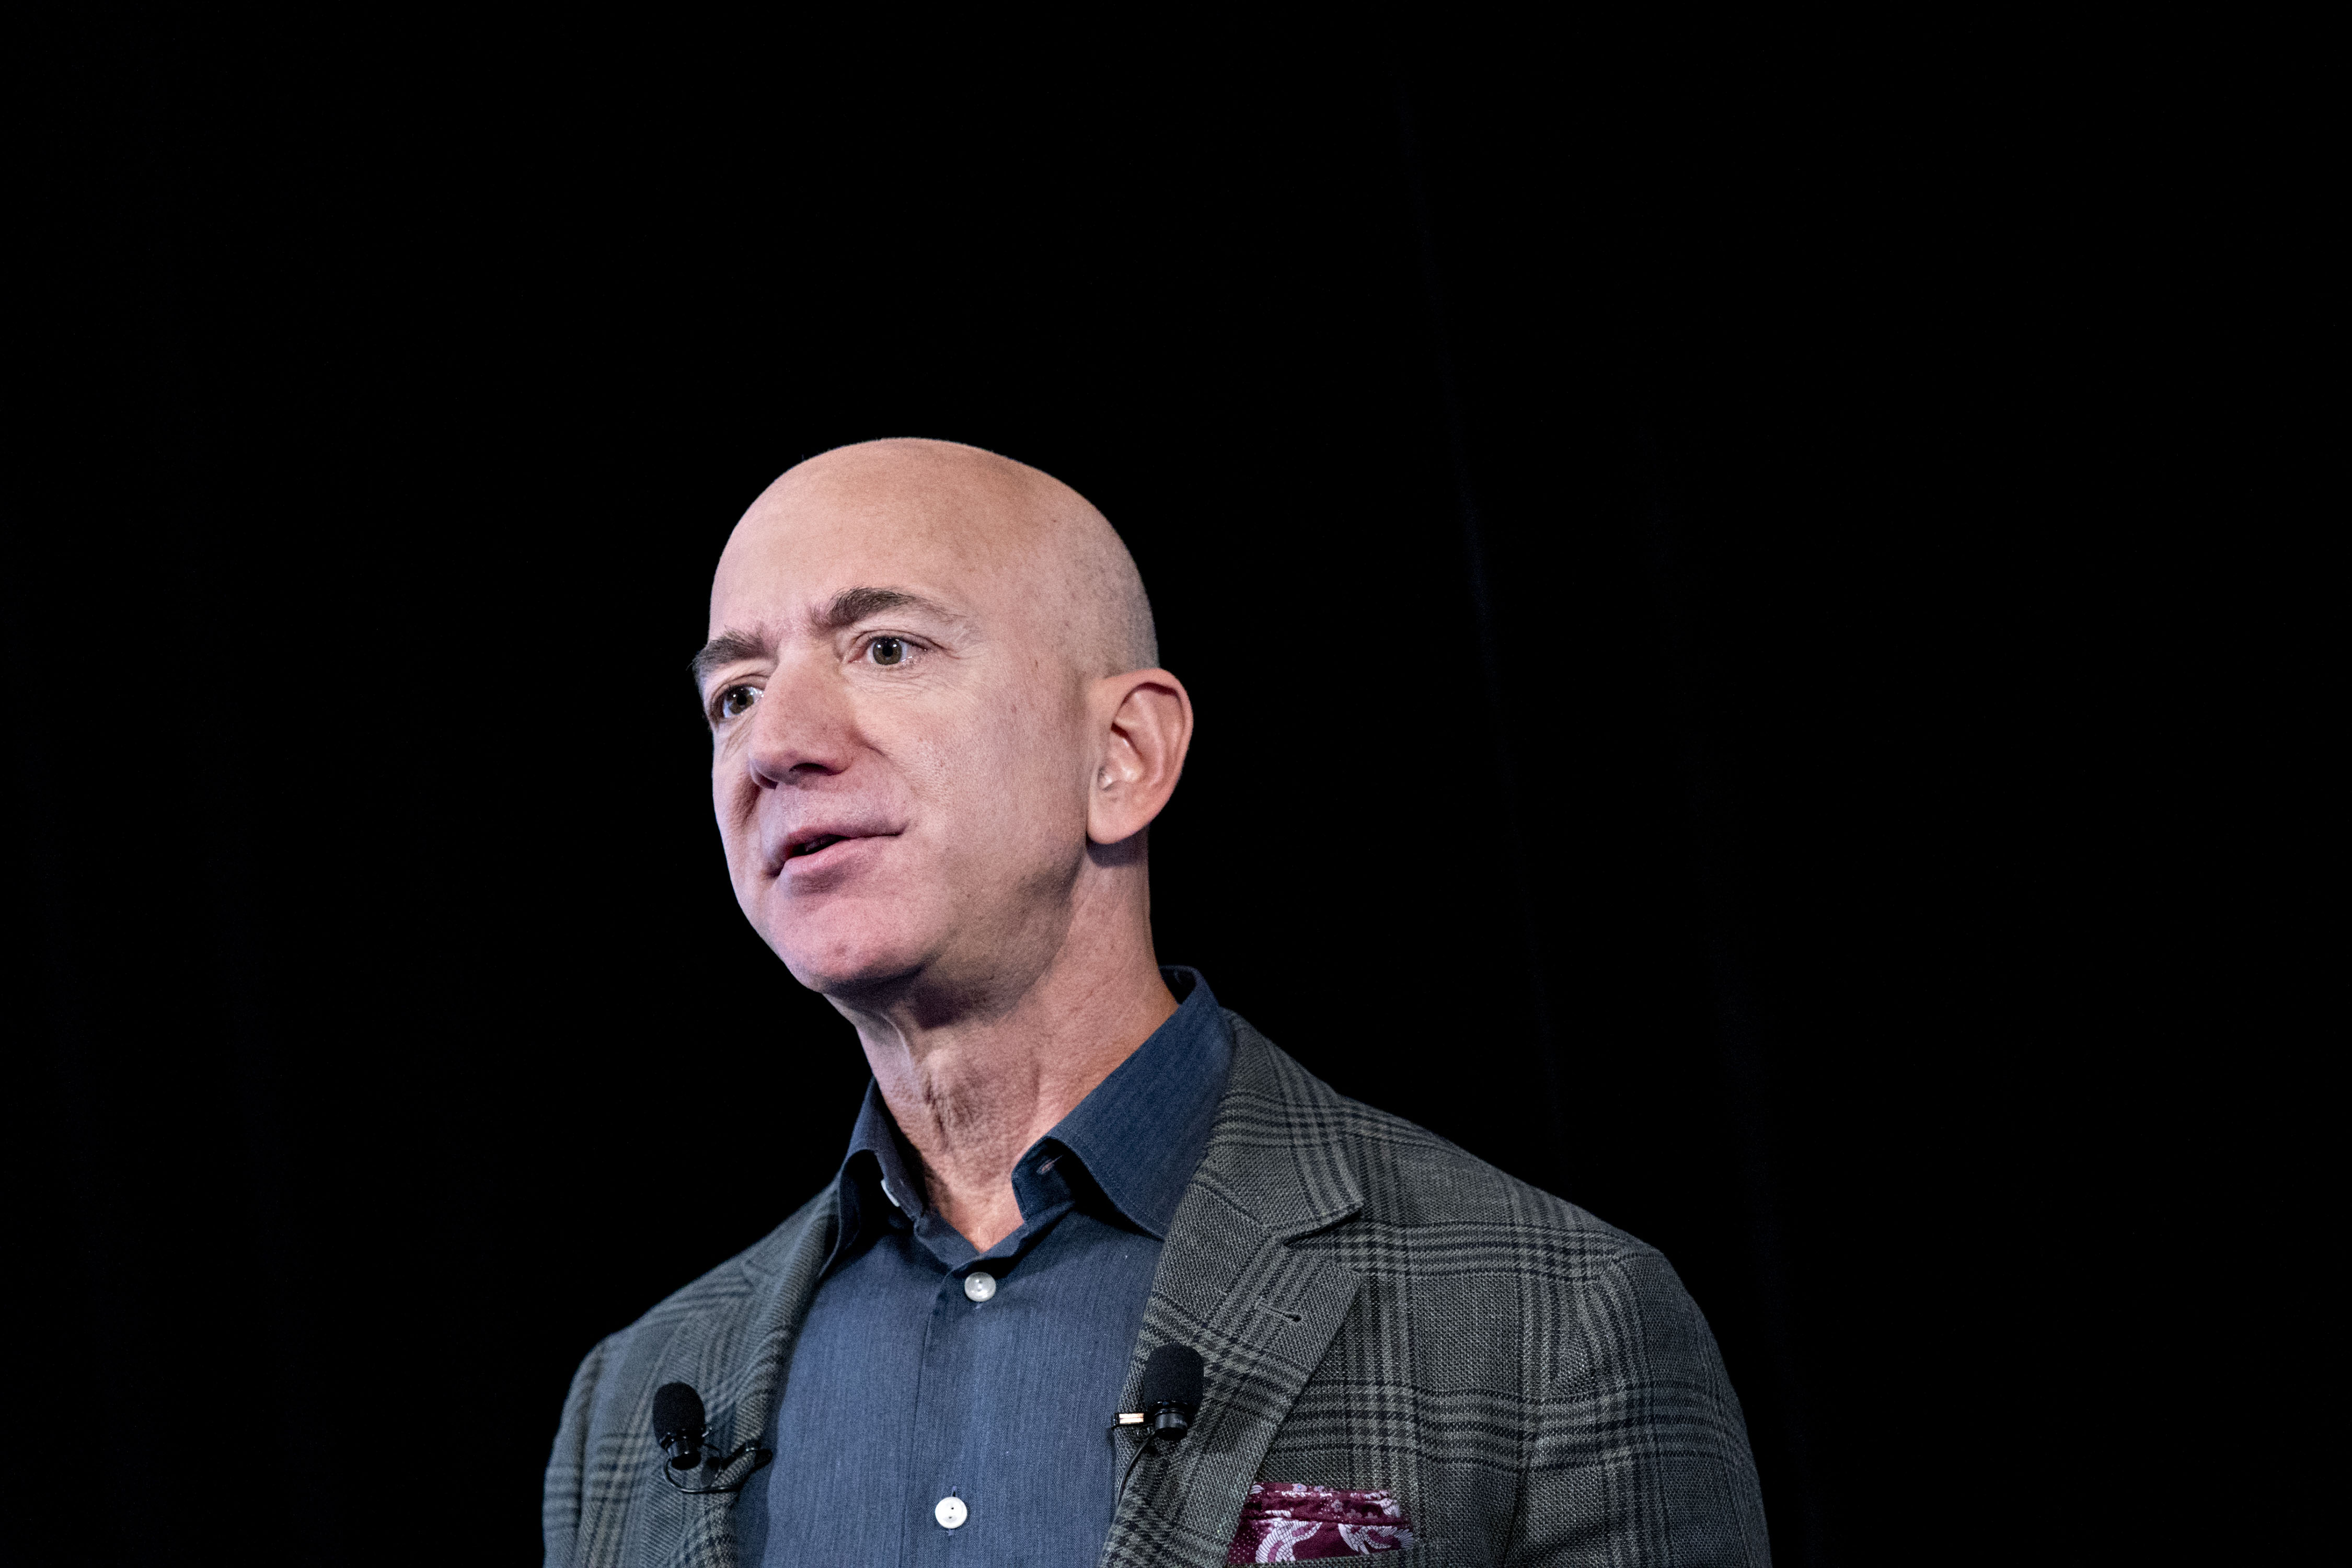 Amazon.com Inc. CEO Jeff Bezos Speaks At The National Press Club